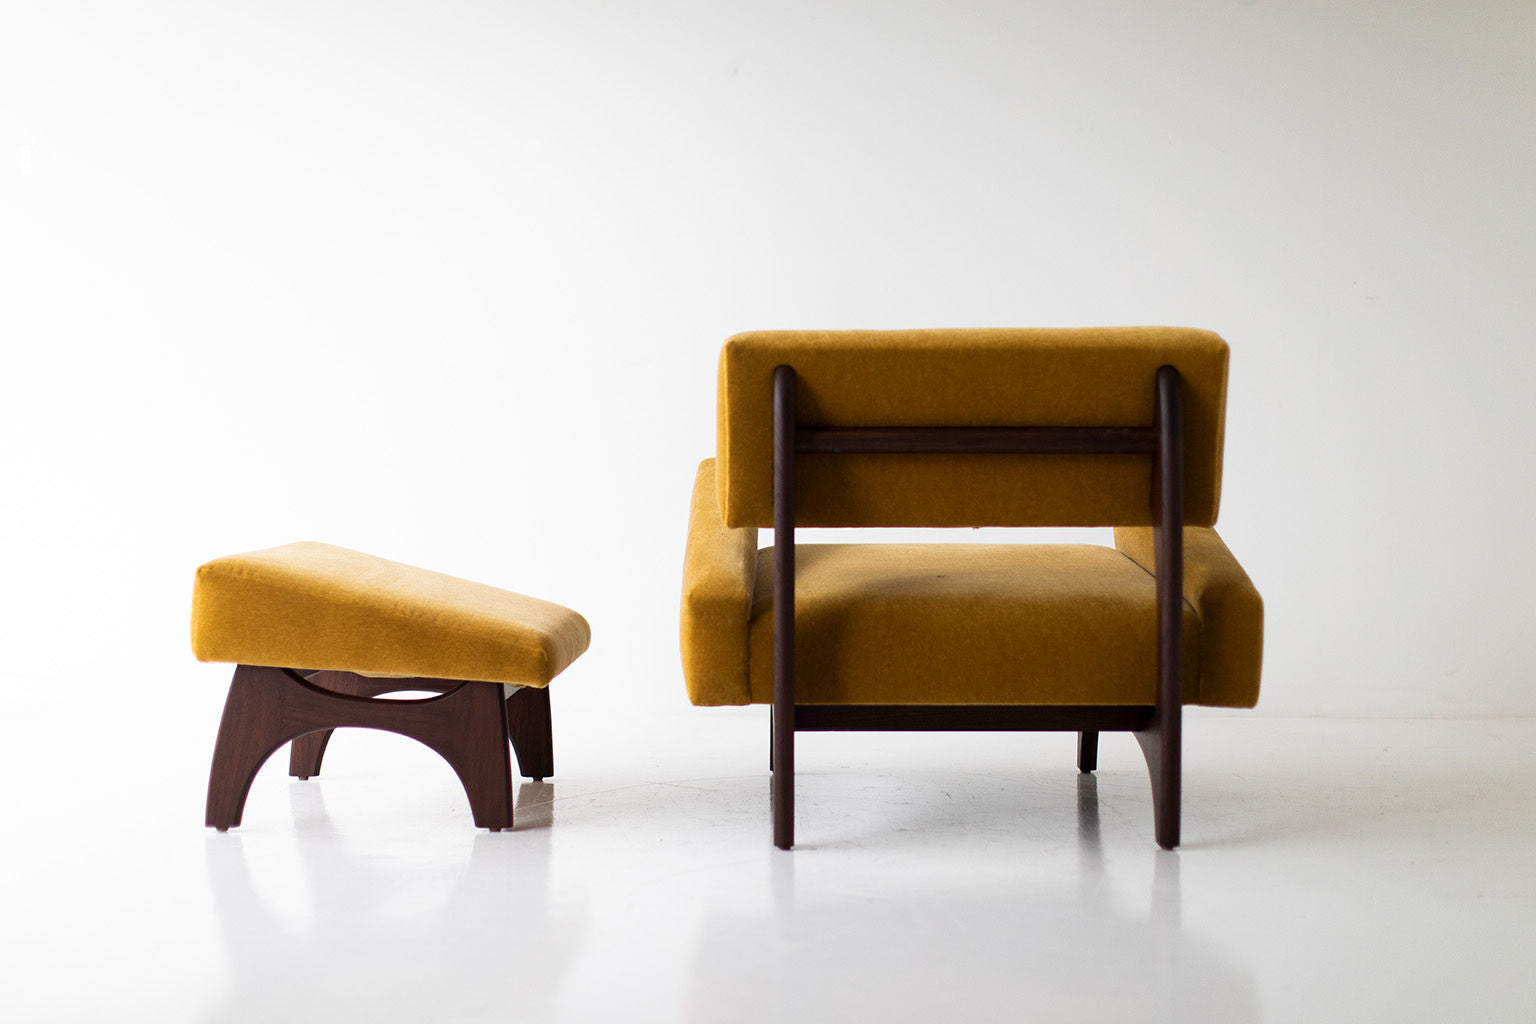      canadian-modern-upholstered-ottoman-2315-04